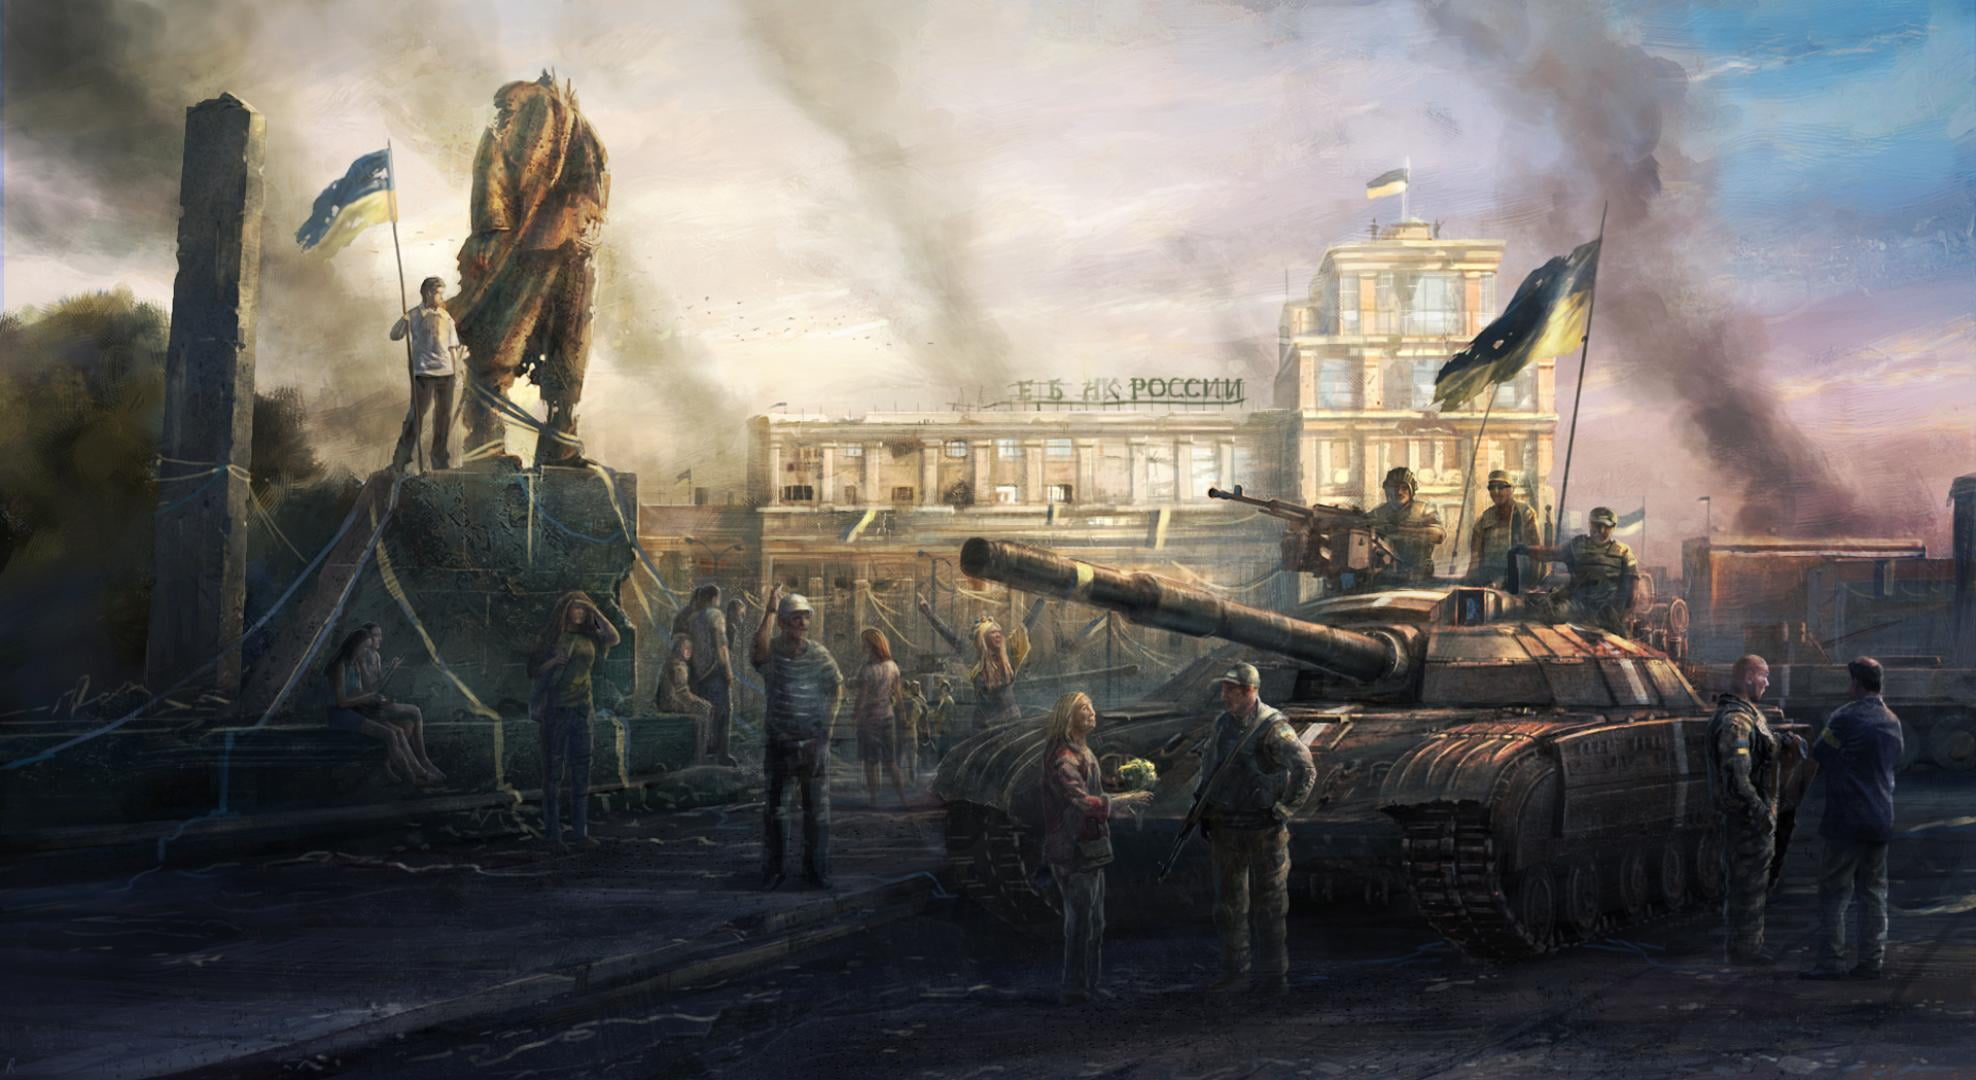 war tank wallpaper, Ukraine, Lenin, Donetsk, release, smoke - physical structure